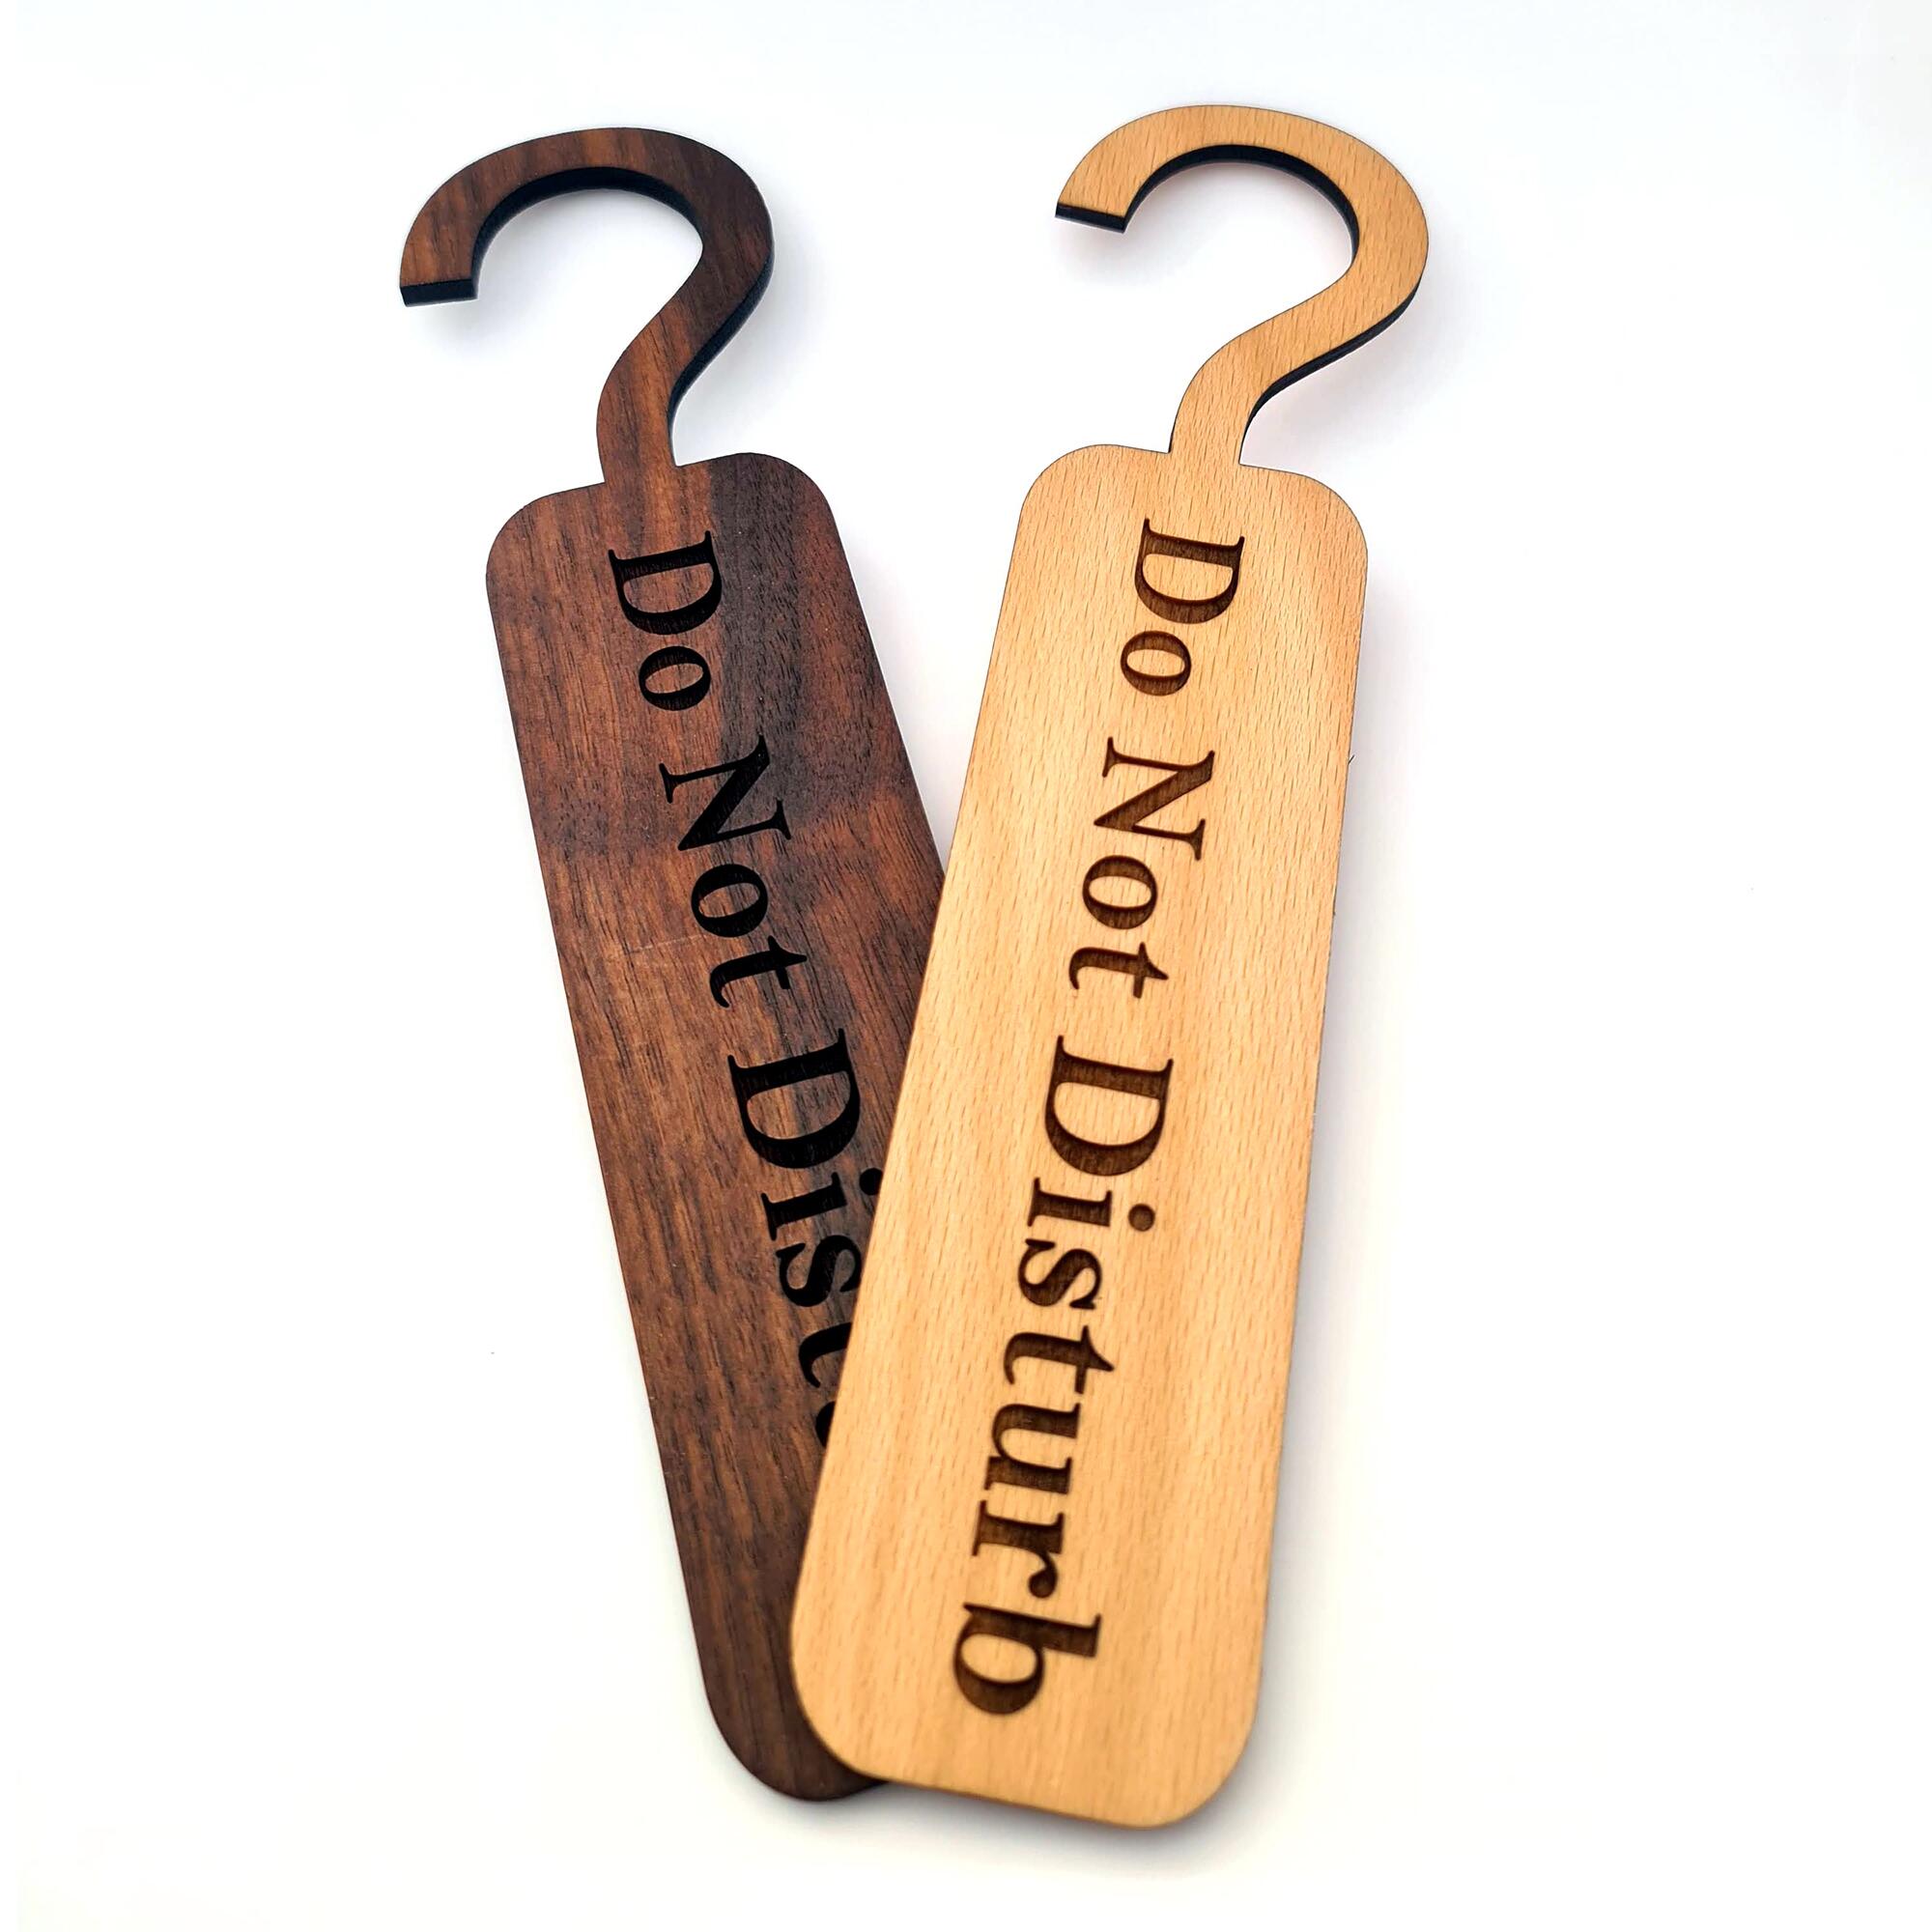 Wooden door tags with "Do Not Disturb" inscribed.